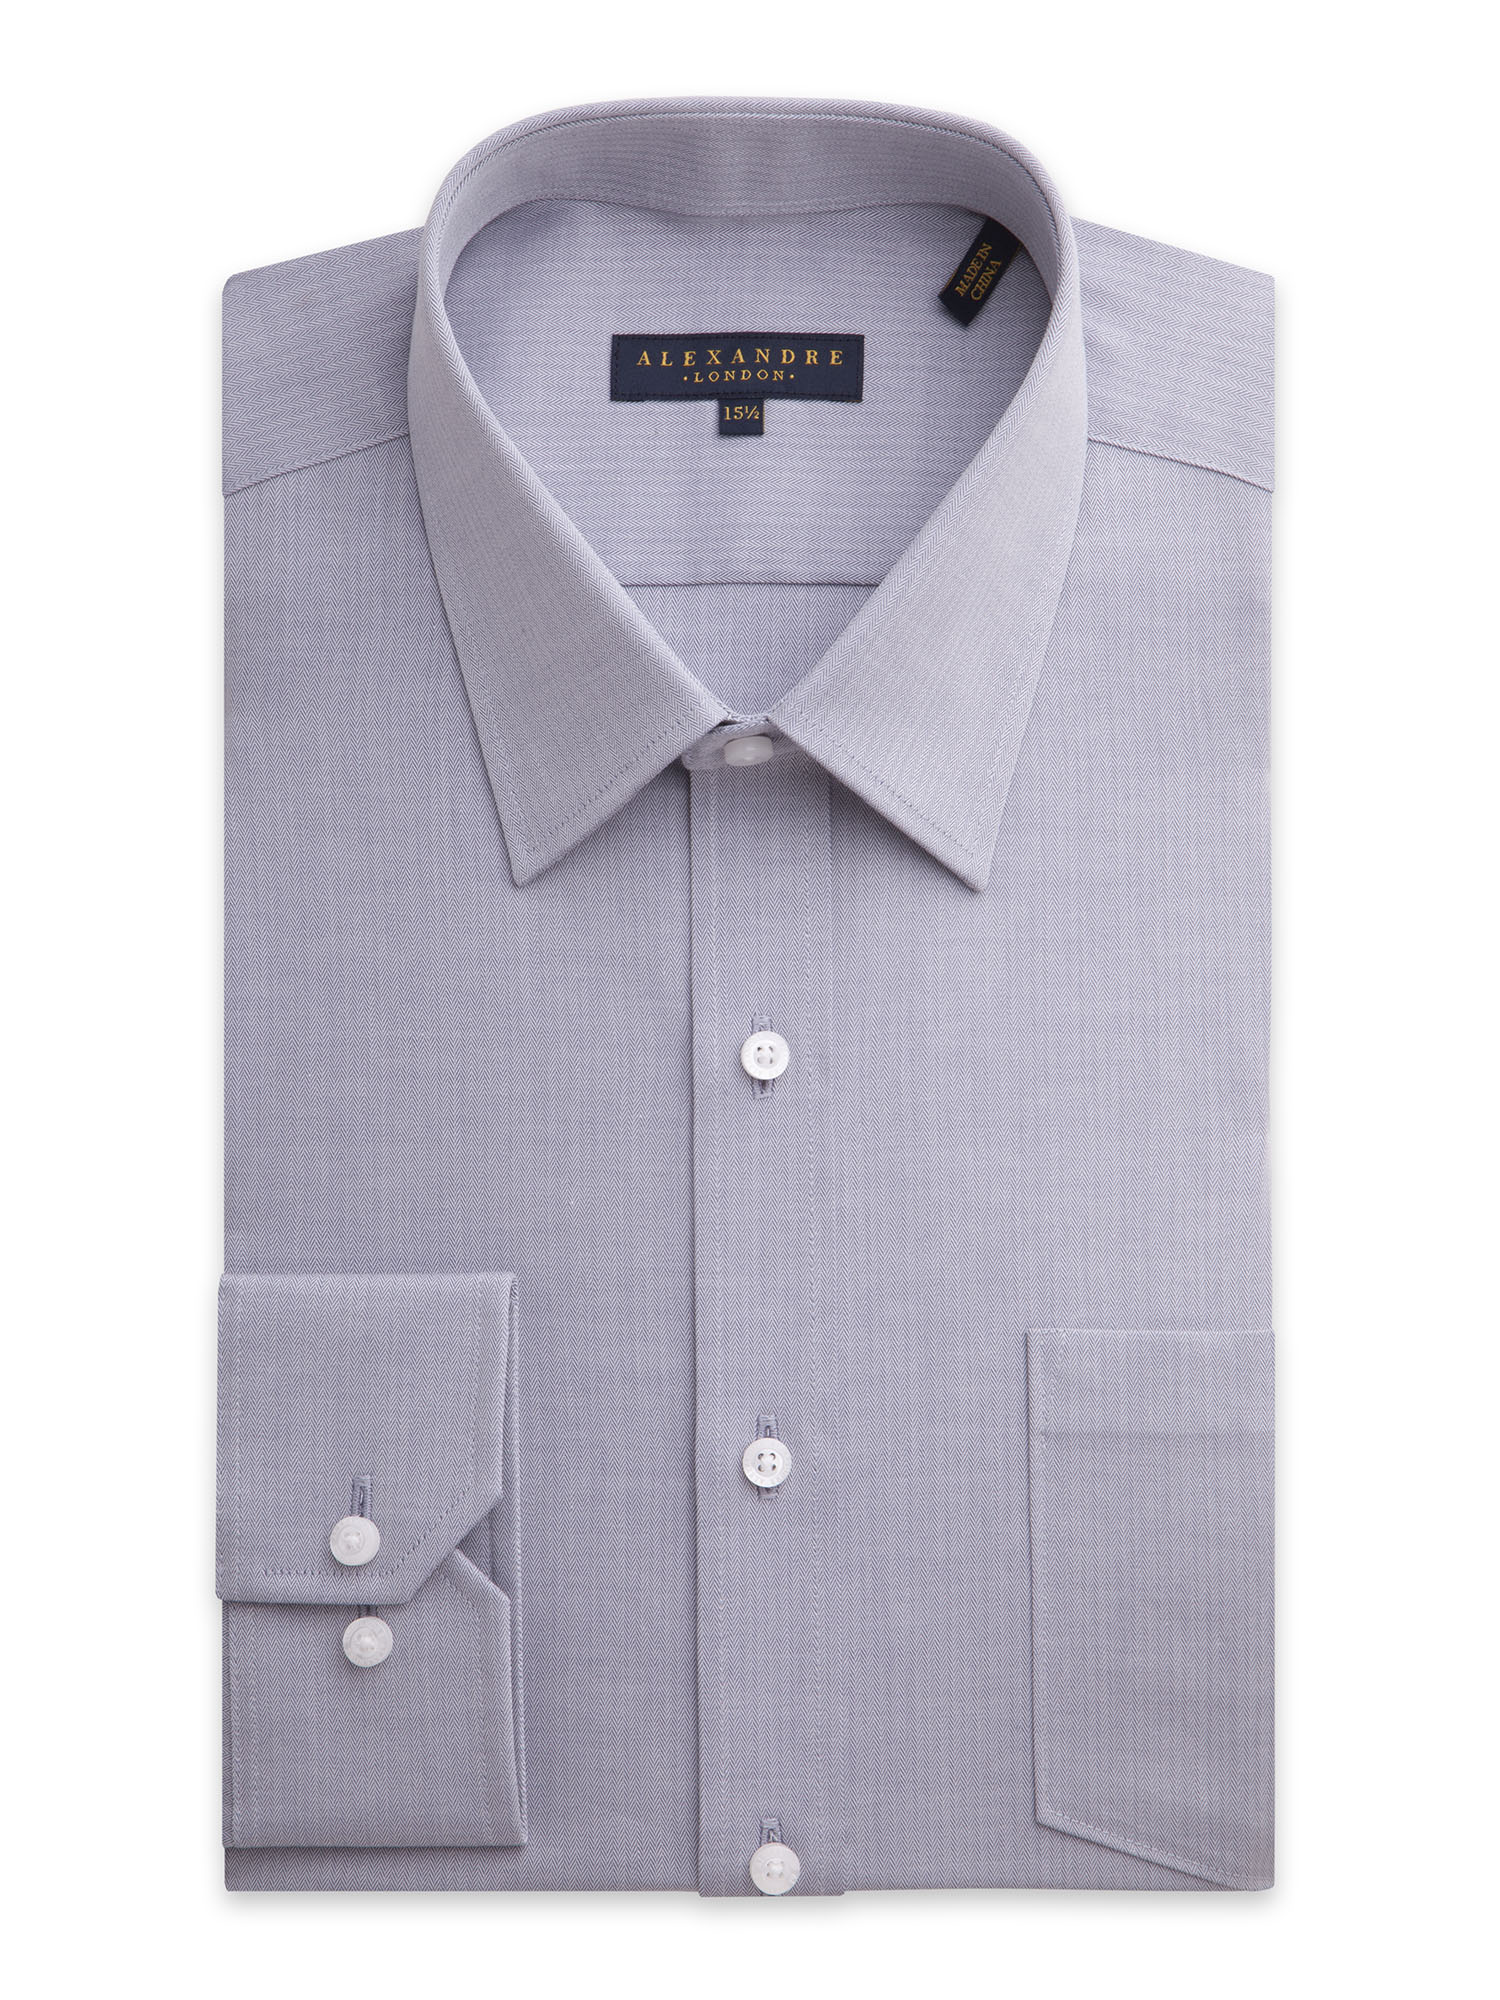 Grey Herringbone Shirt - Shirts - Alexandre London